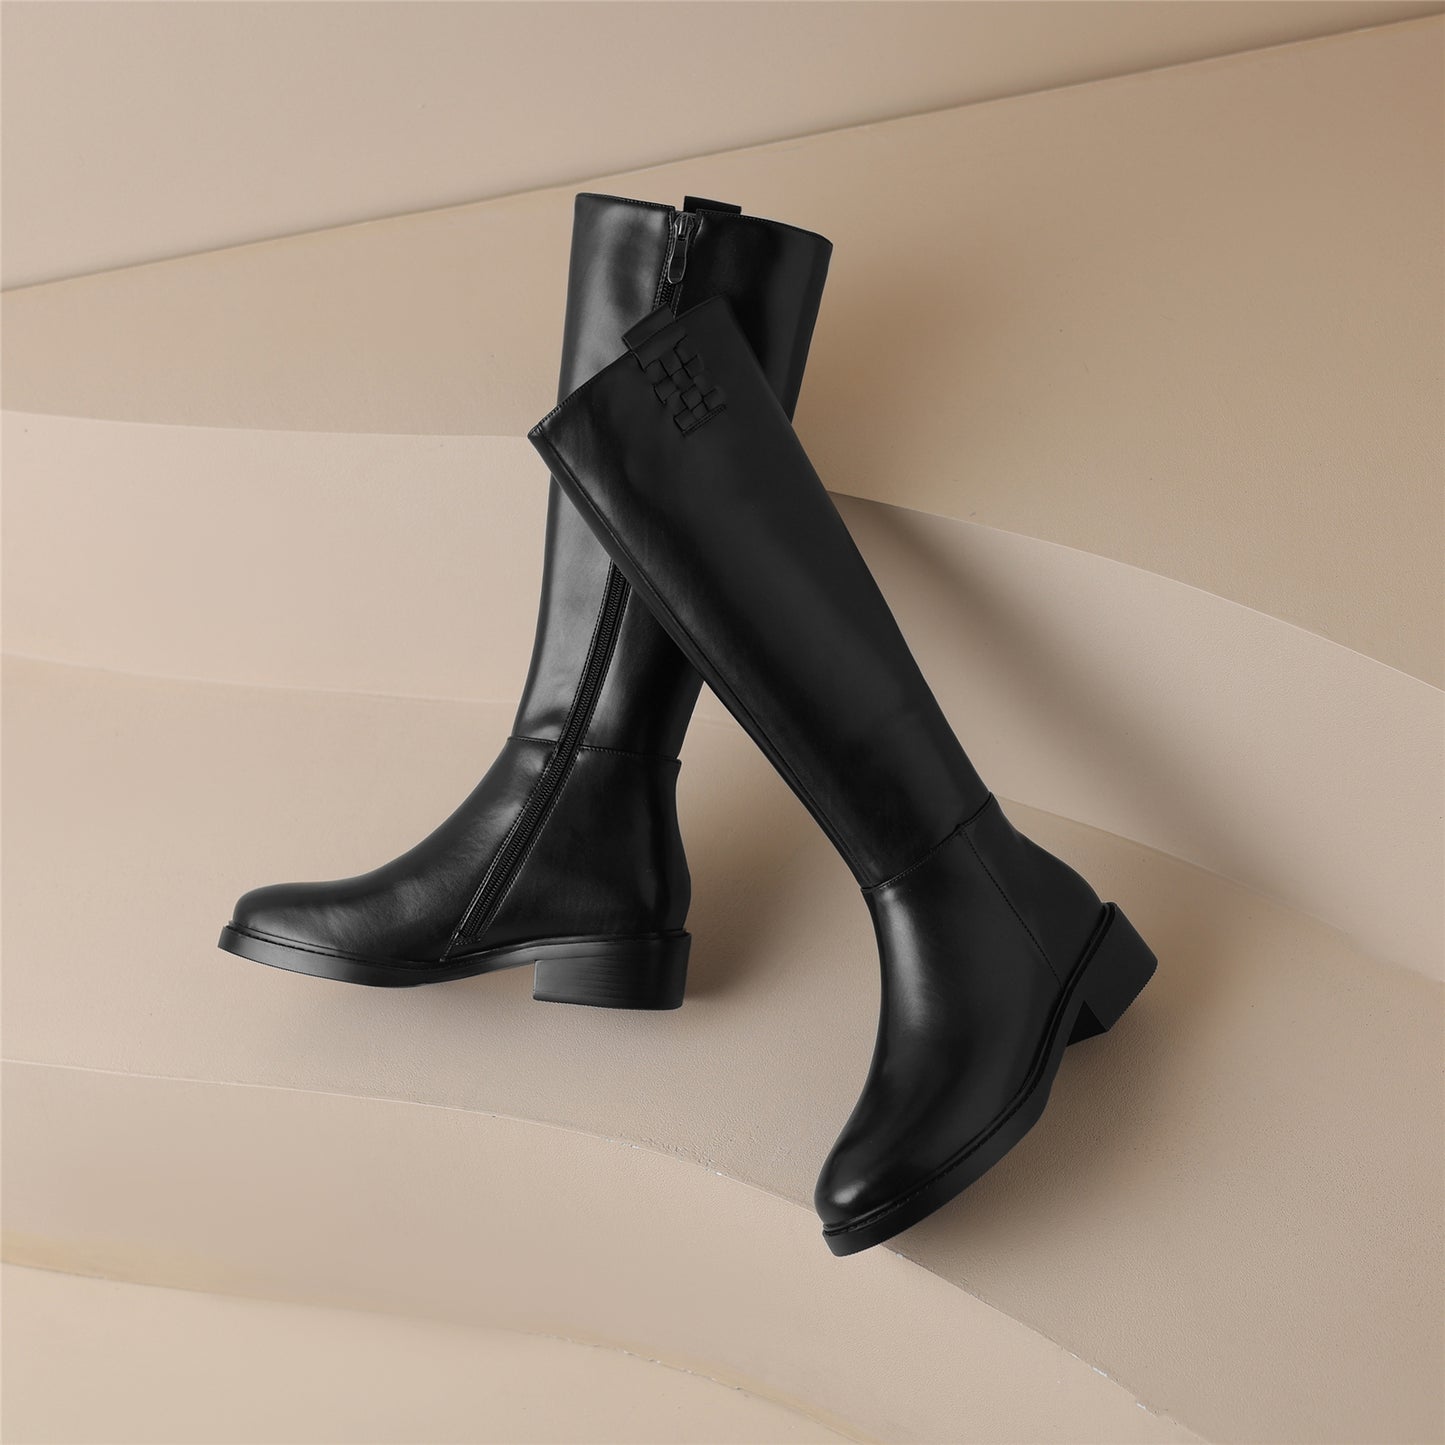 TinaCus Genuine Leather Women's Round Toe Side Zip Up Handmade Low Heel Weave Design Knee High Boots